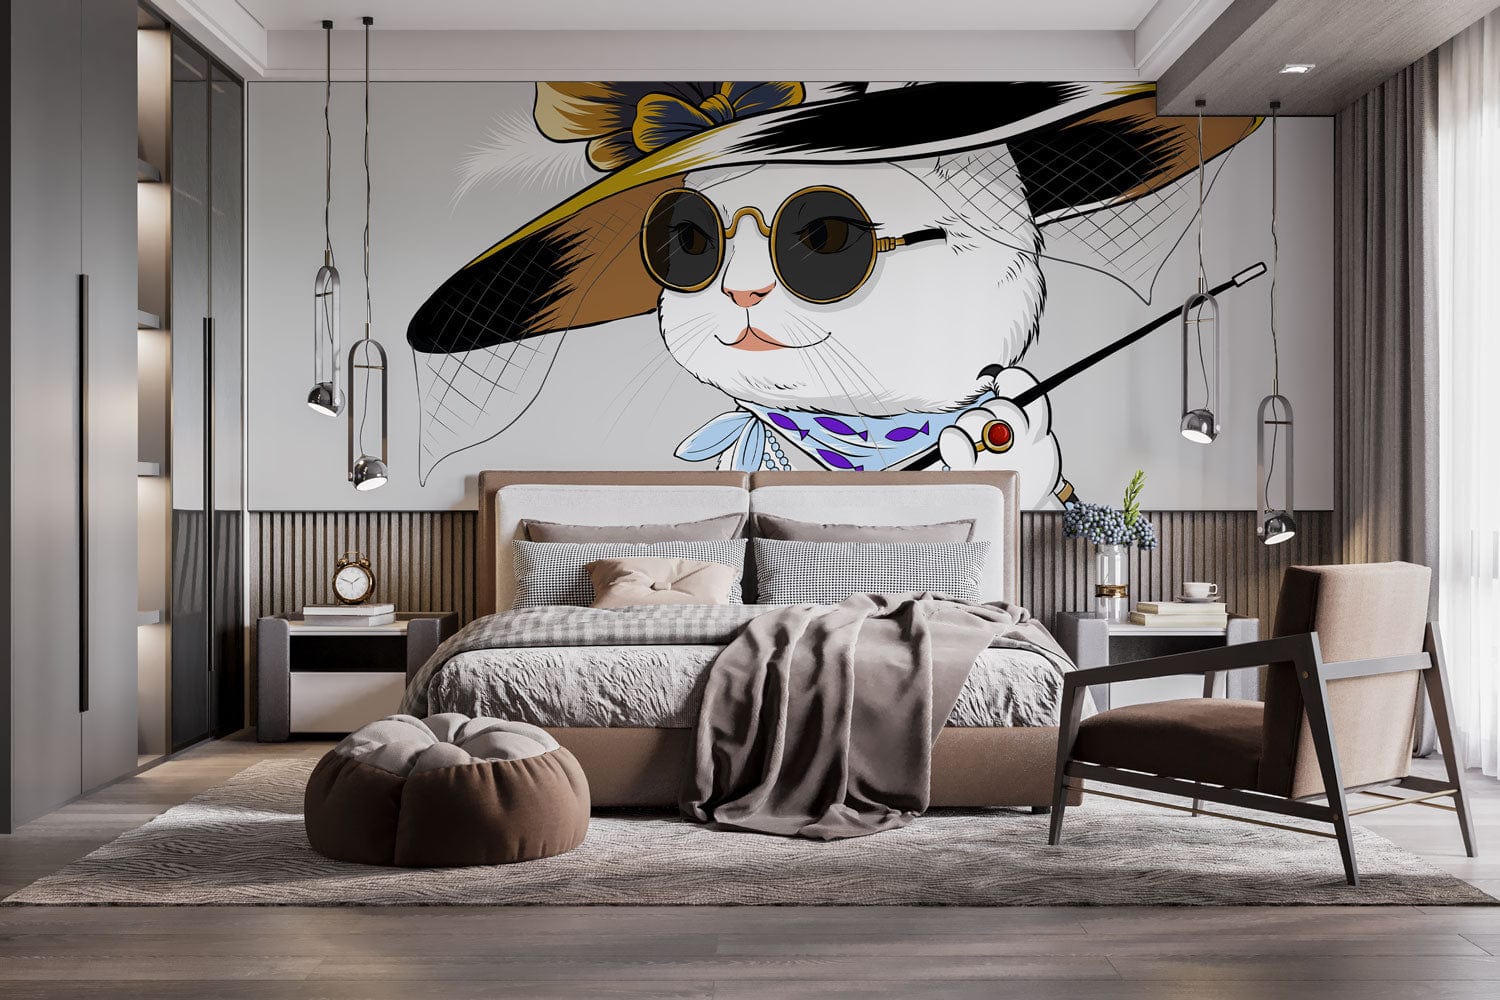 Elegant Lady Cat Wallpaper Mural Design for Use in Decorating Bedrooms